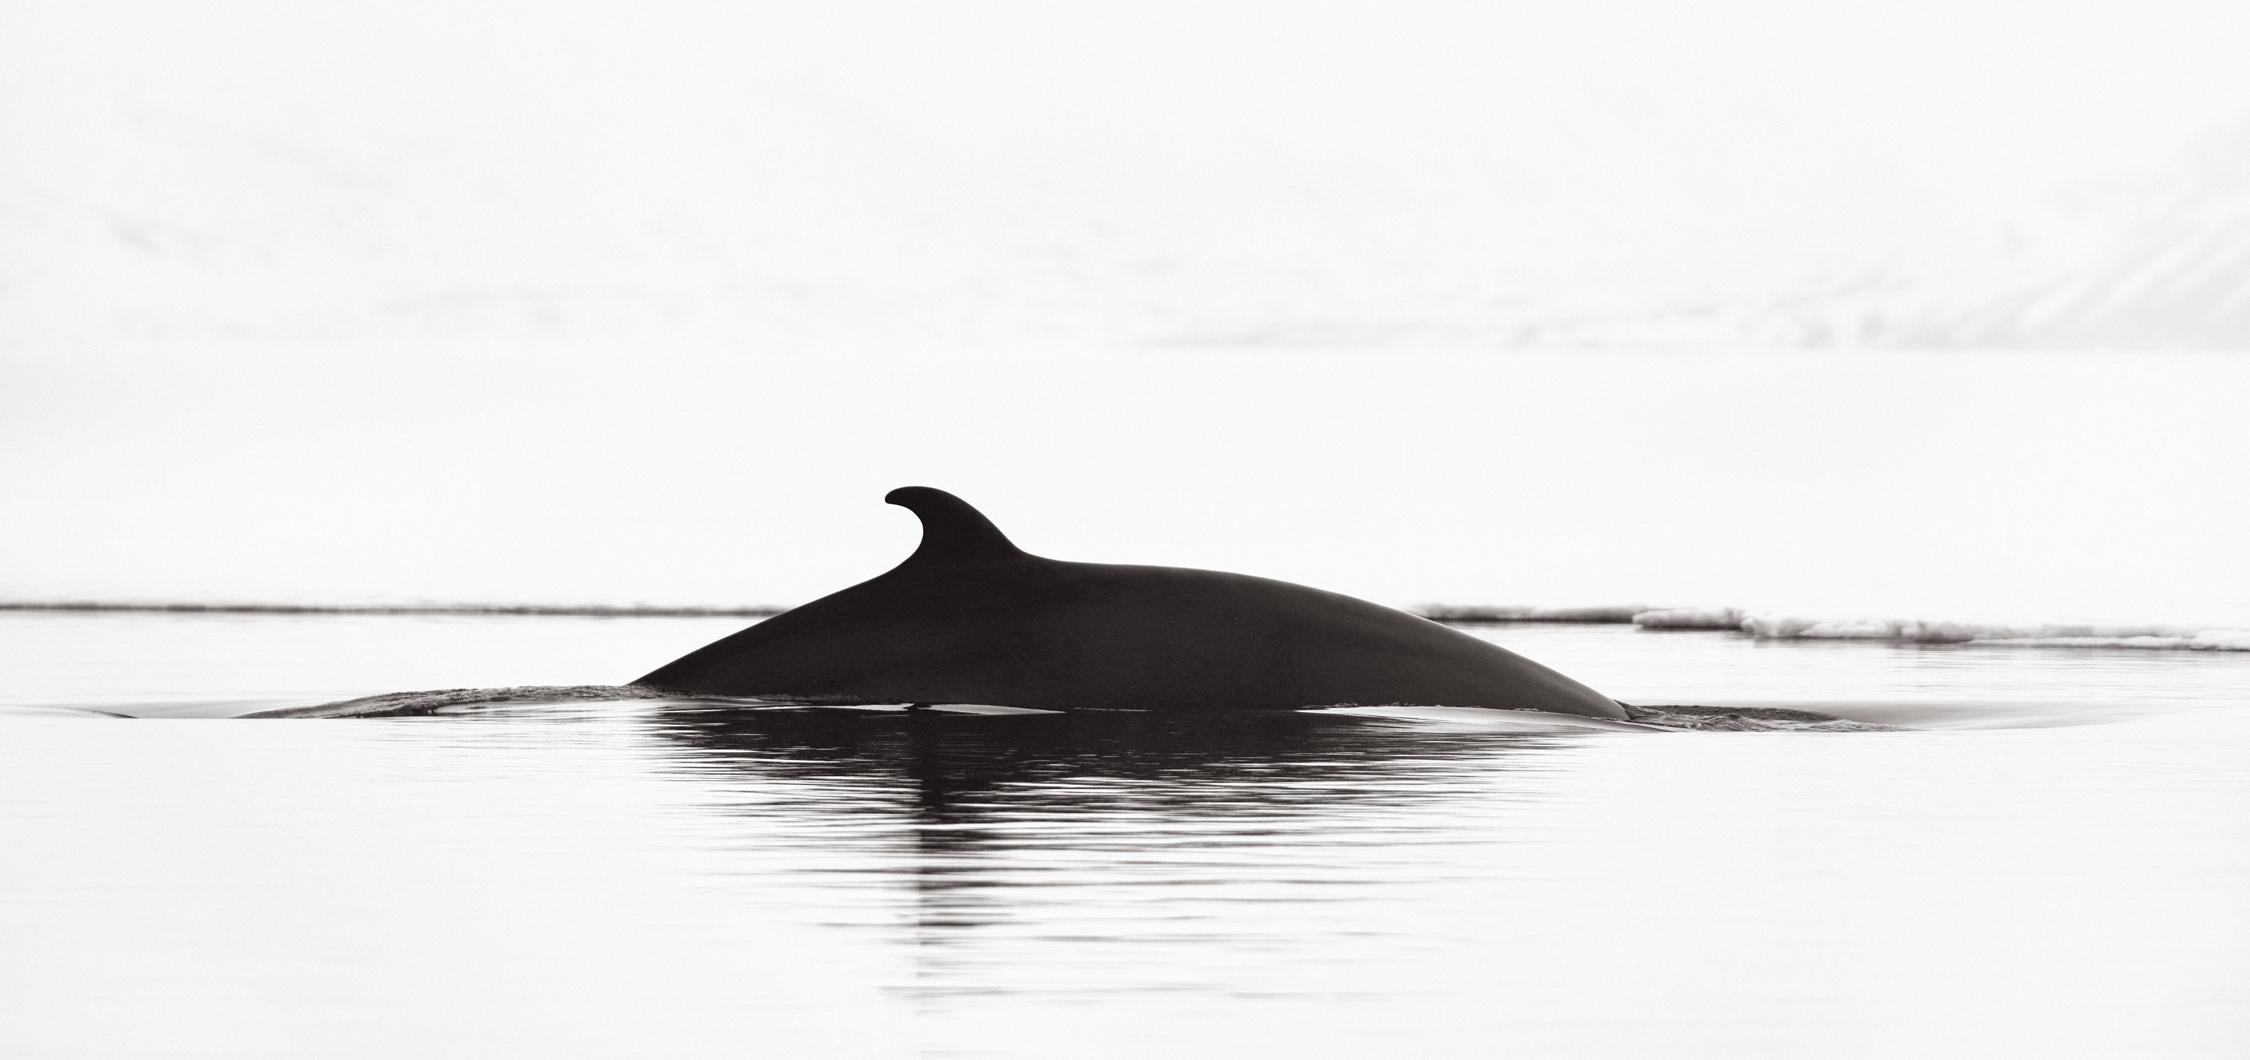 Drew Doggett Black and White Photograph - Surreal, Abstract Black & White Photograph of Whale Surfacing